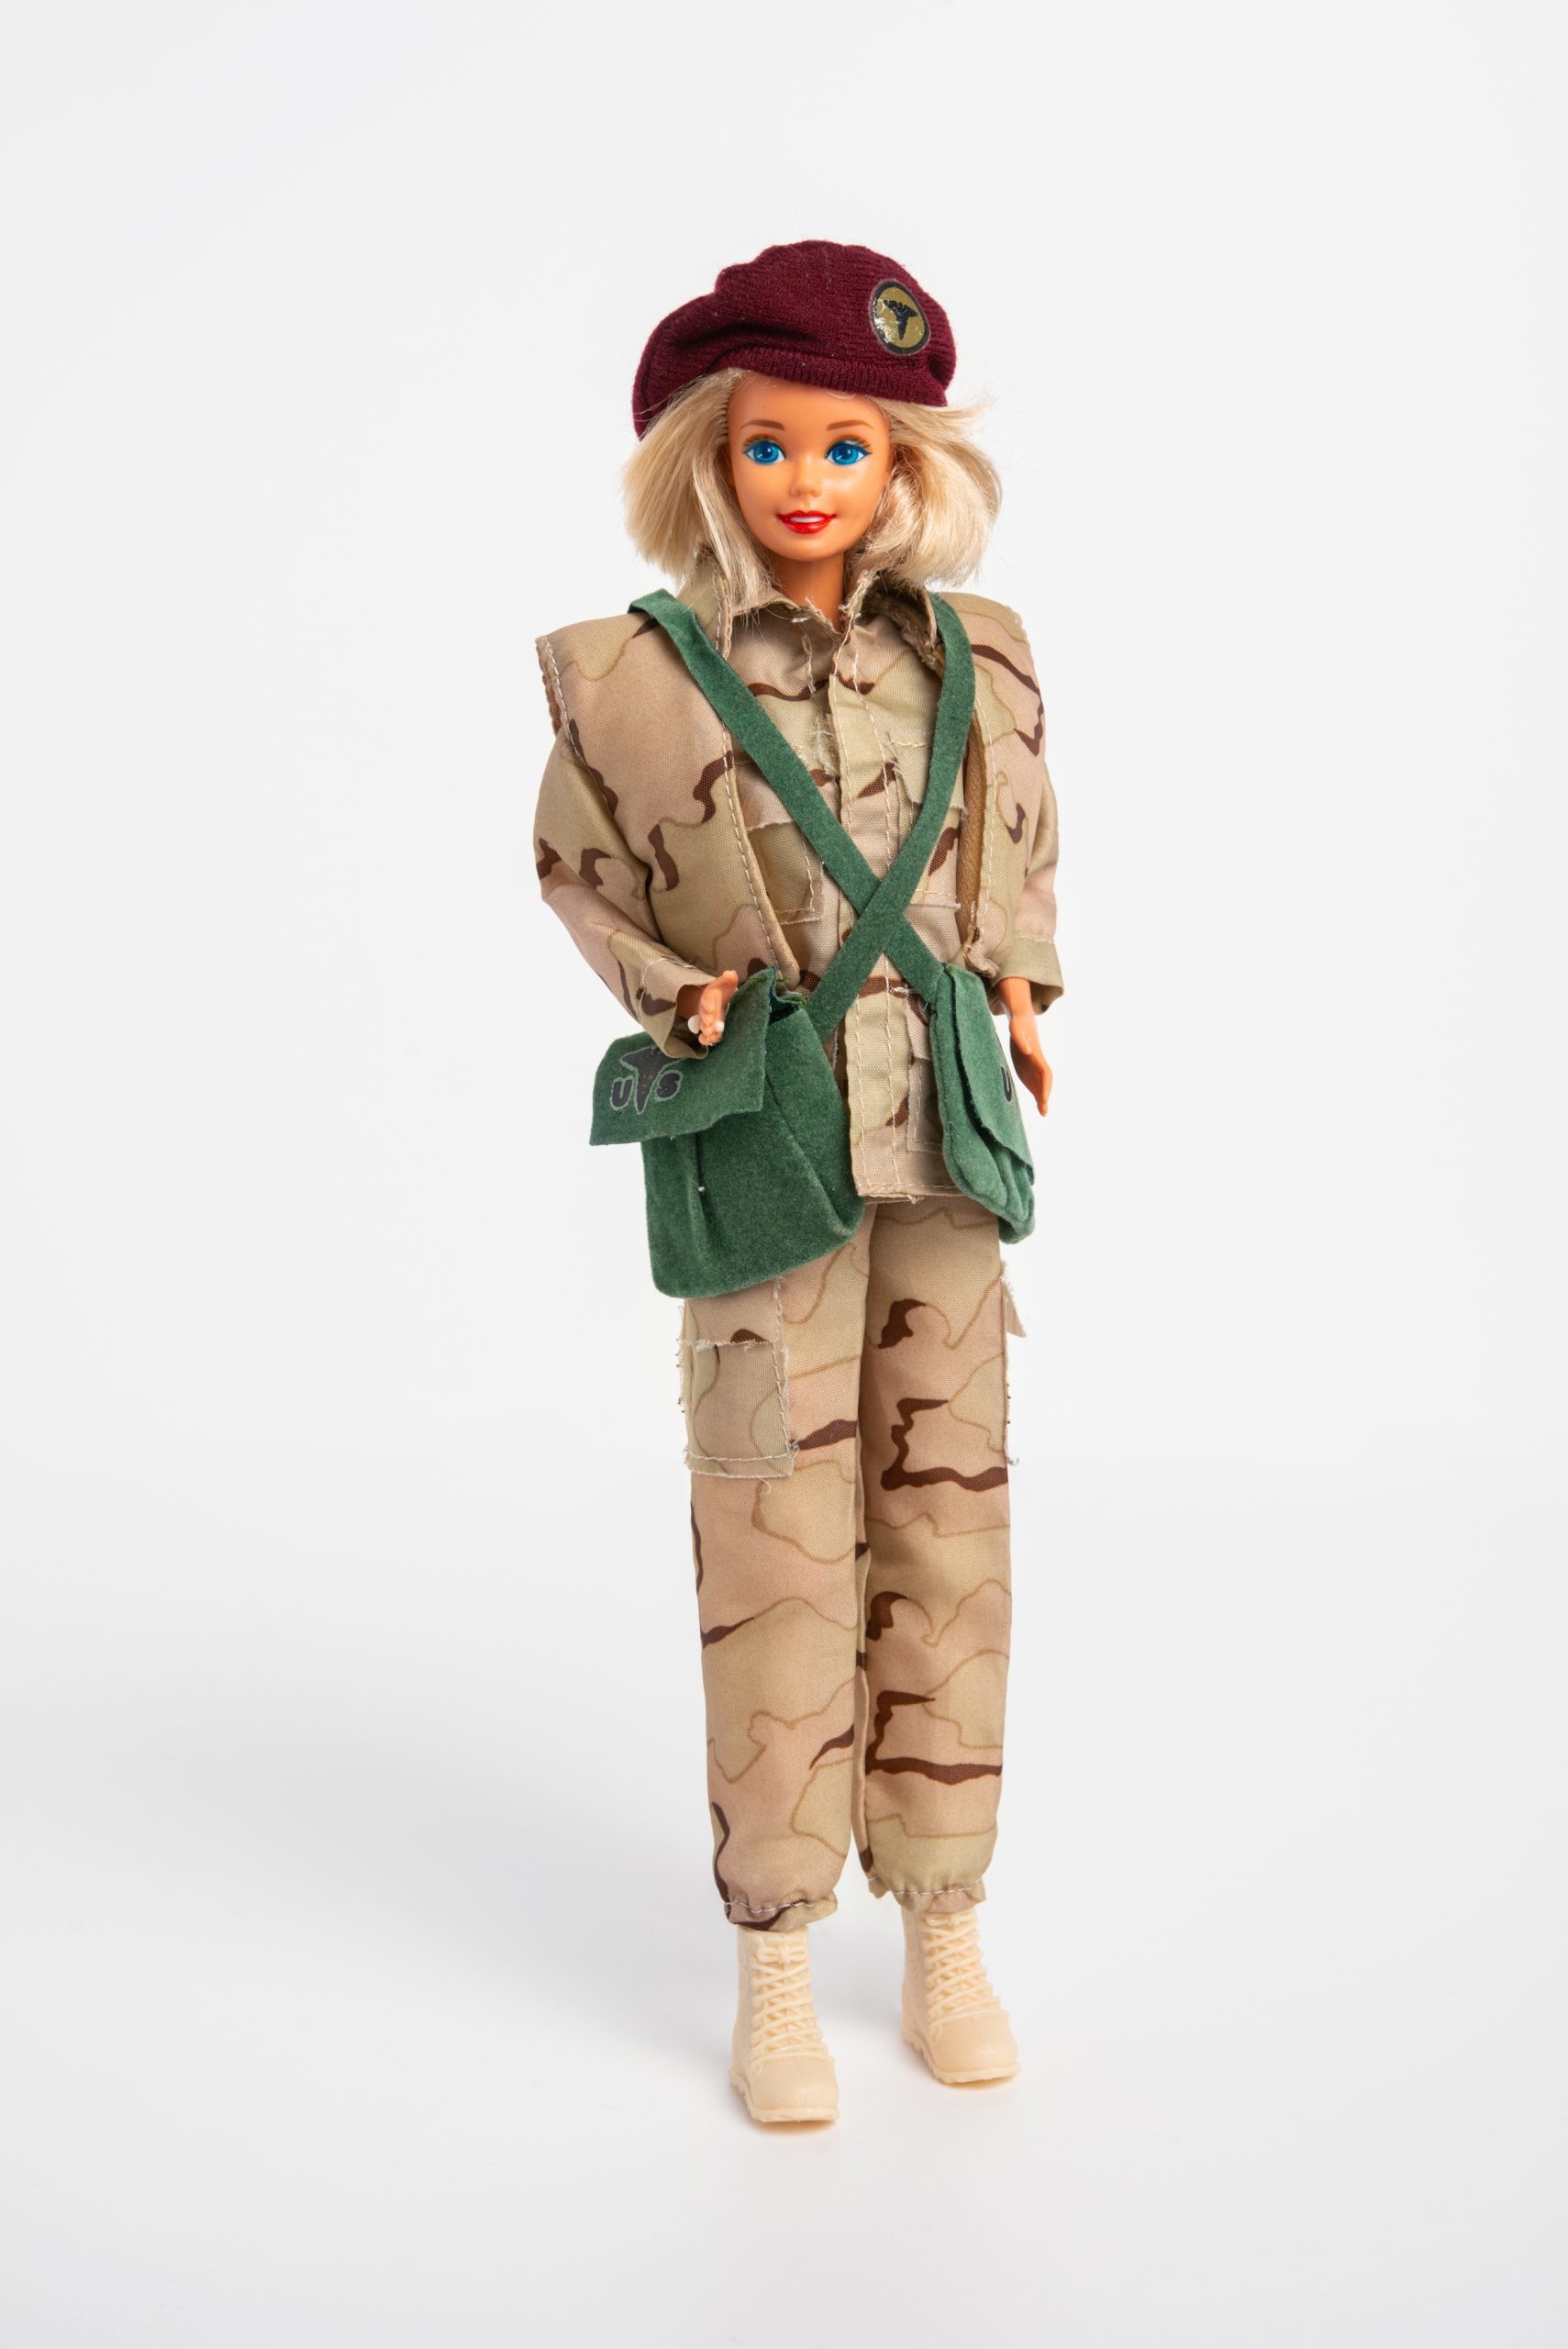 Box Barbie i Ken - Picture of Be Happy Museum Poznan - Tripadvisor